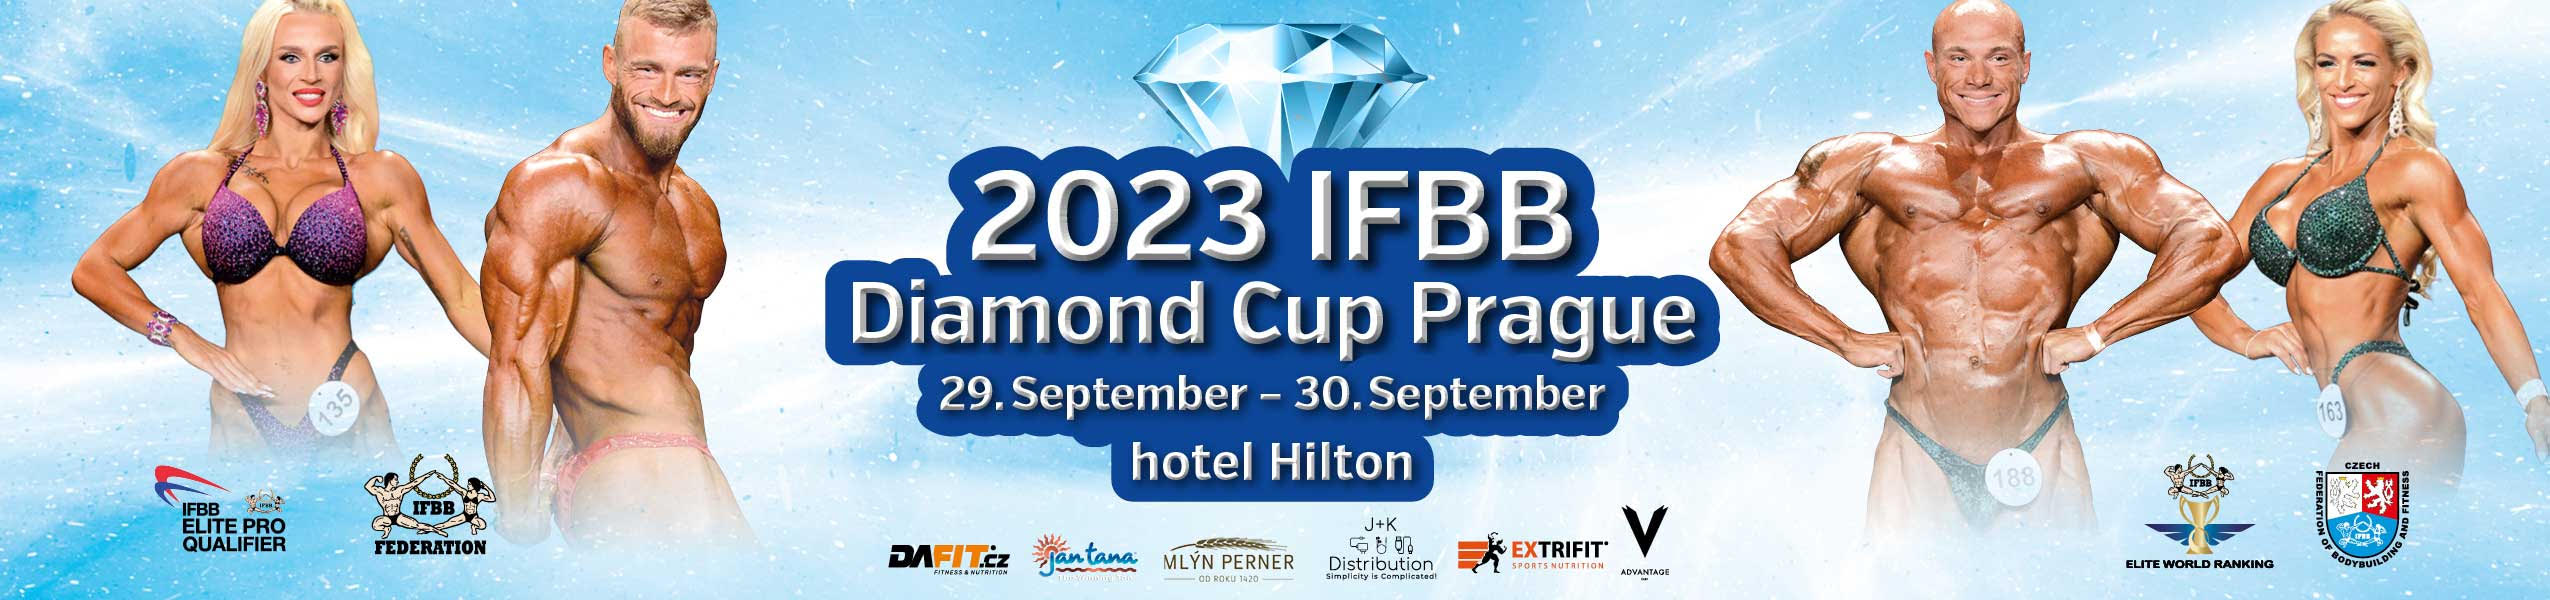 DIAMOND CUP PRAGUE - IFBB